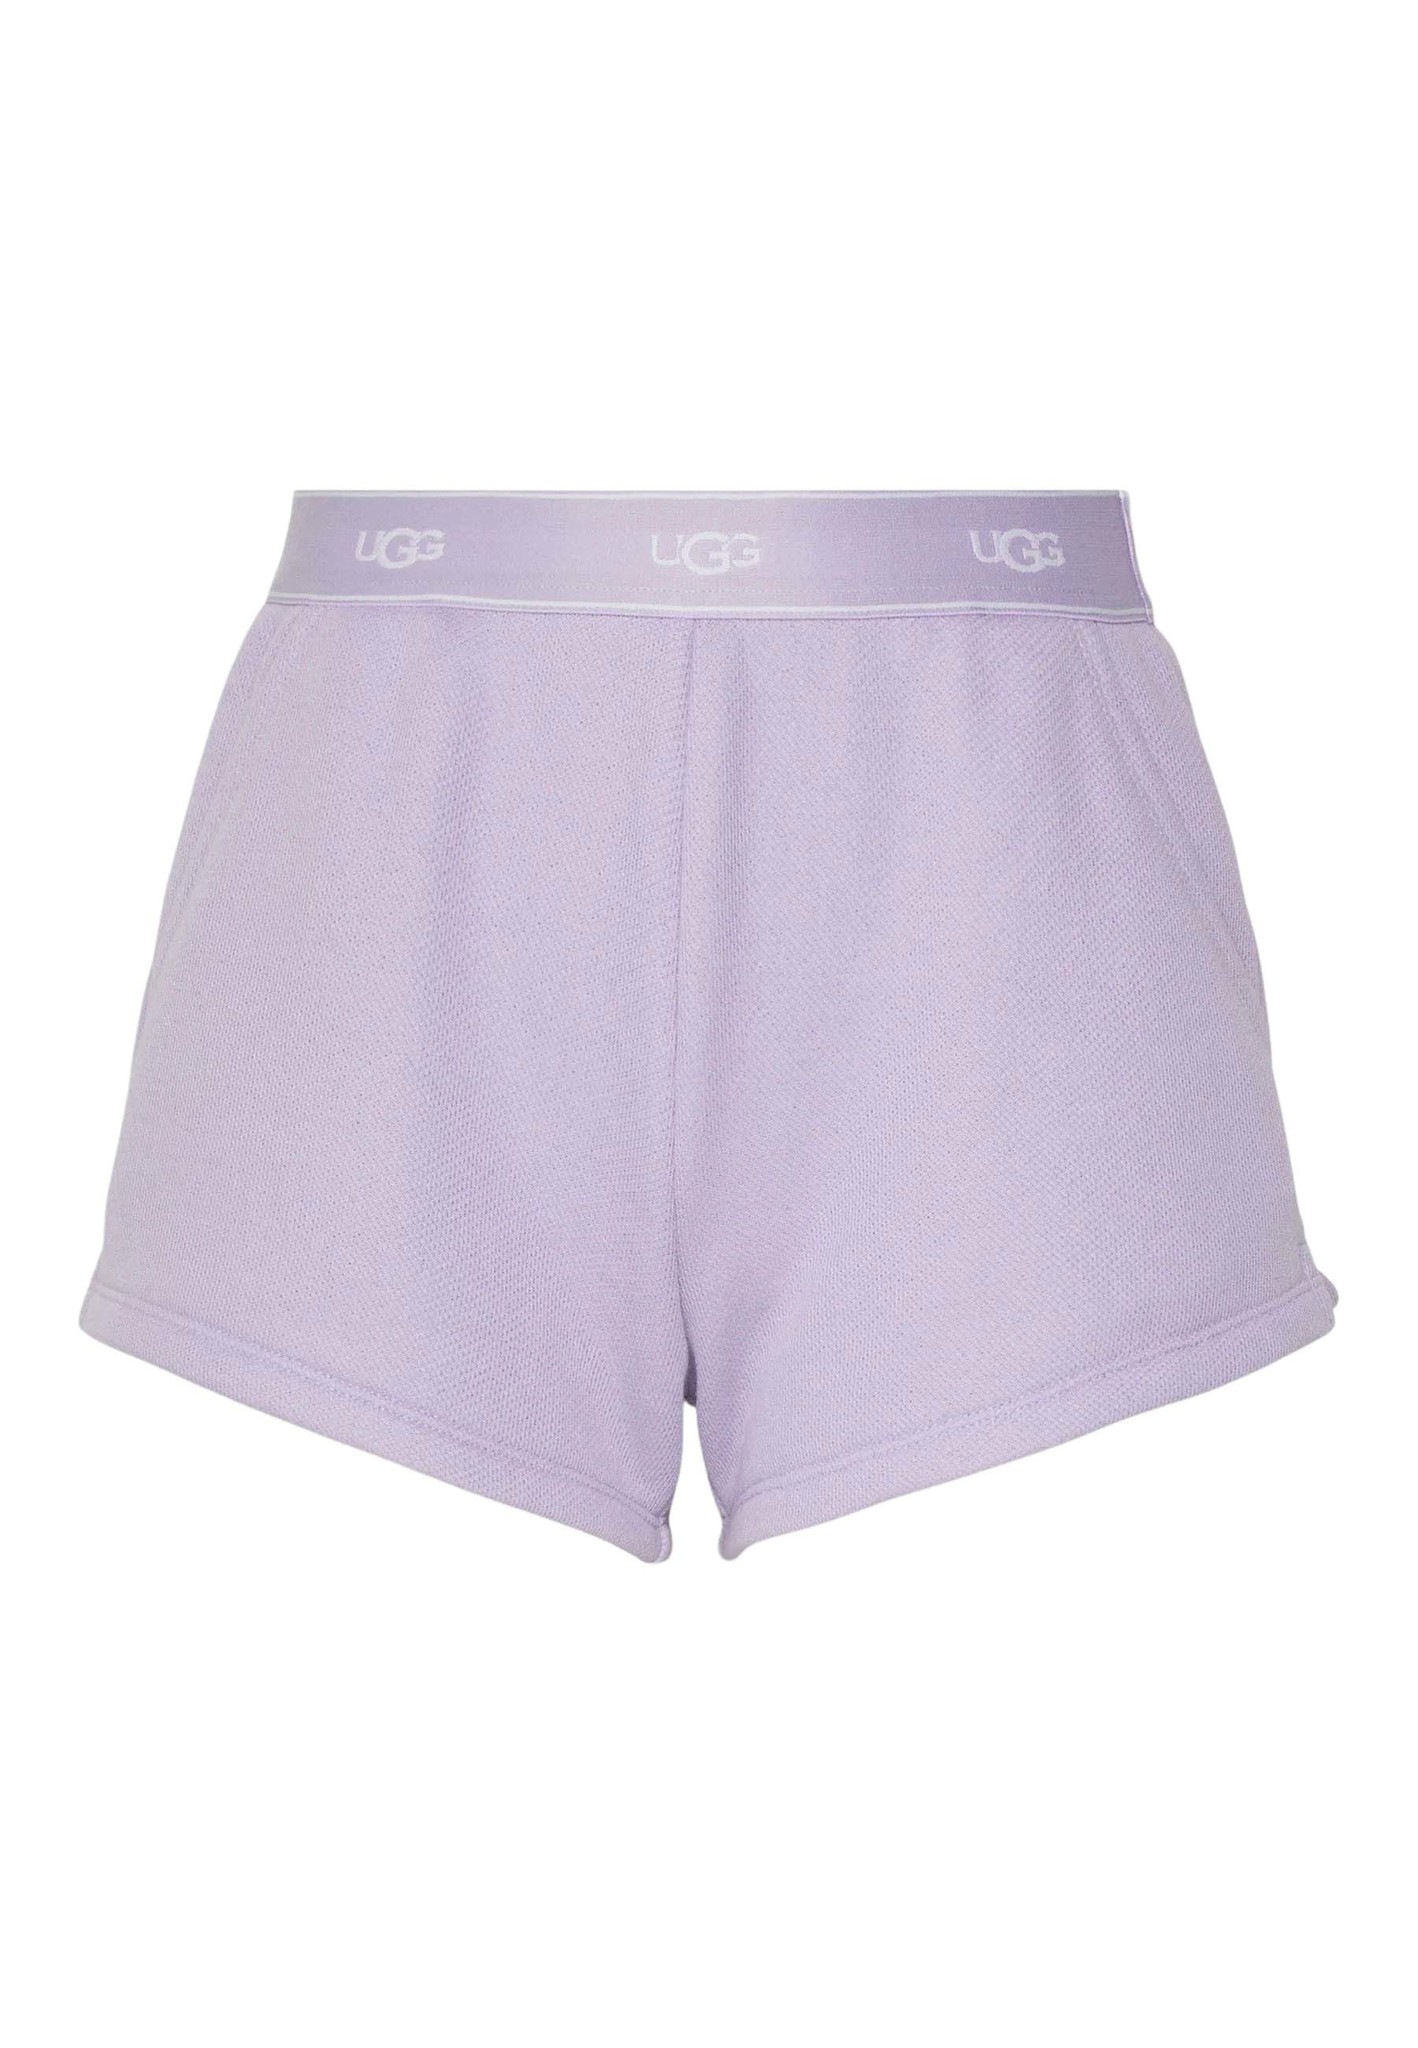 Ugg Albin shorts lila Dames maat S